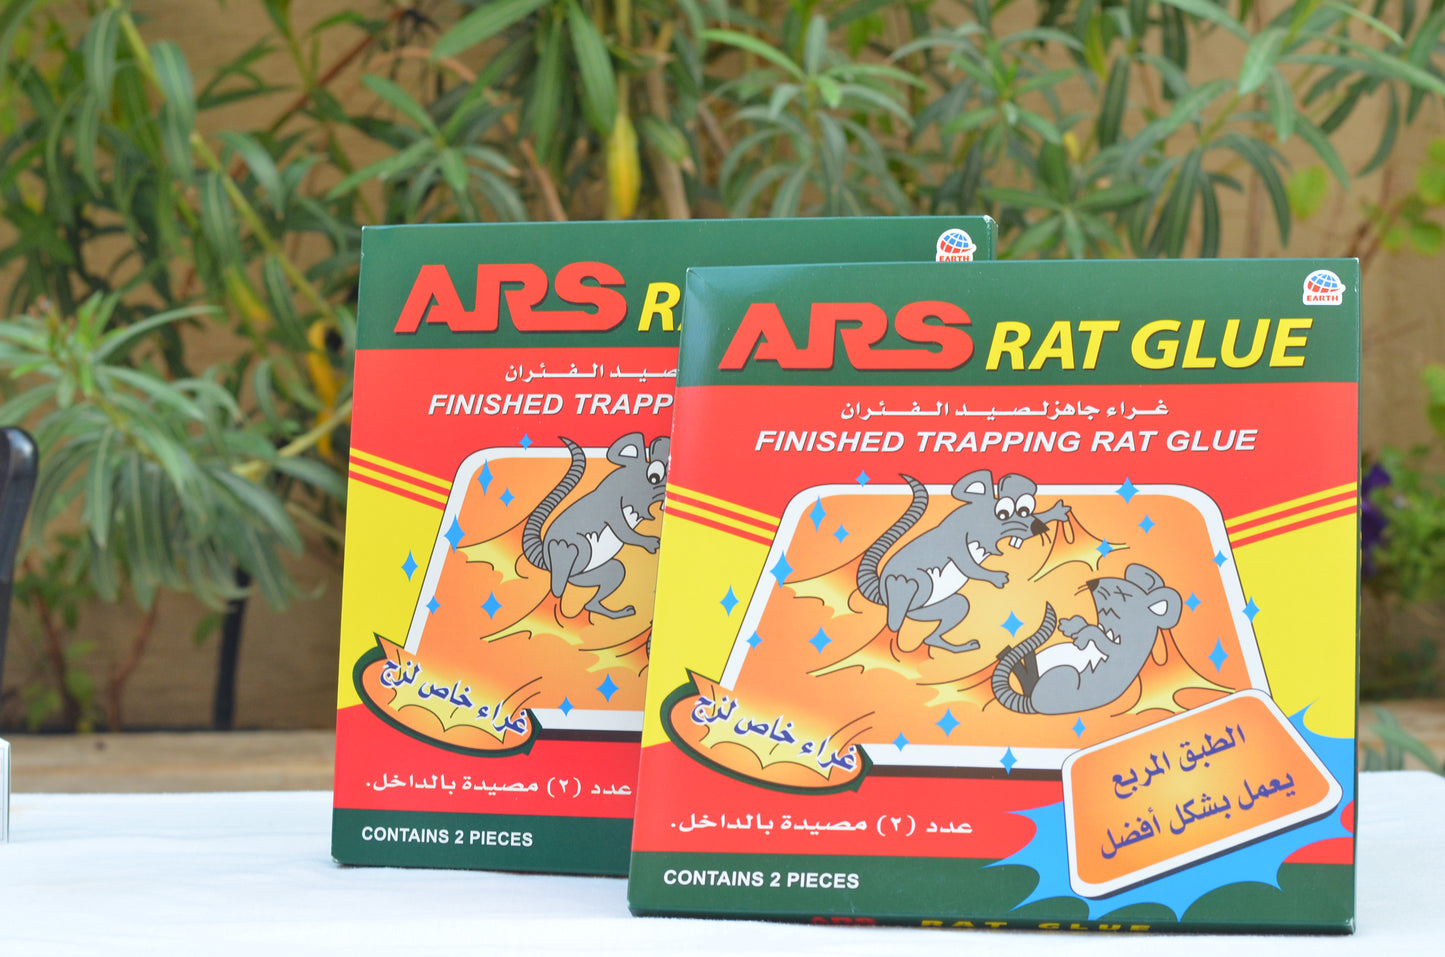 ARS Mice and Rat glue Trap